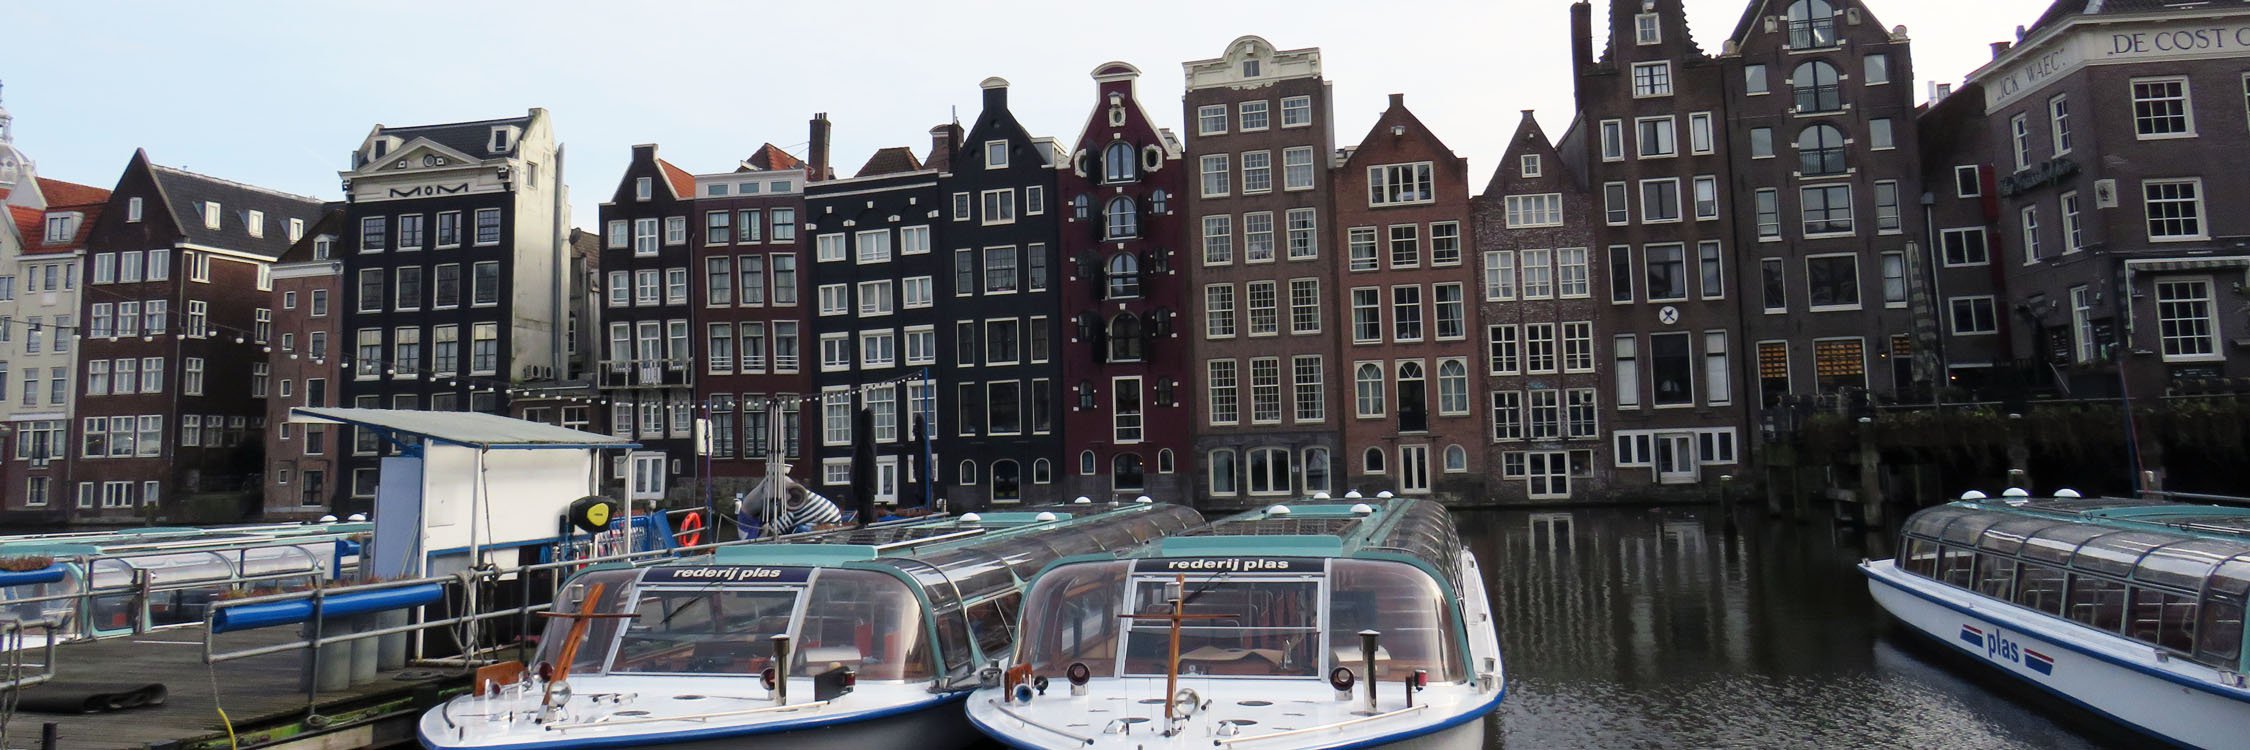 Amsterdam regio tours1.jpg